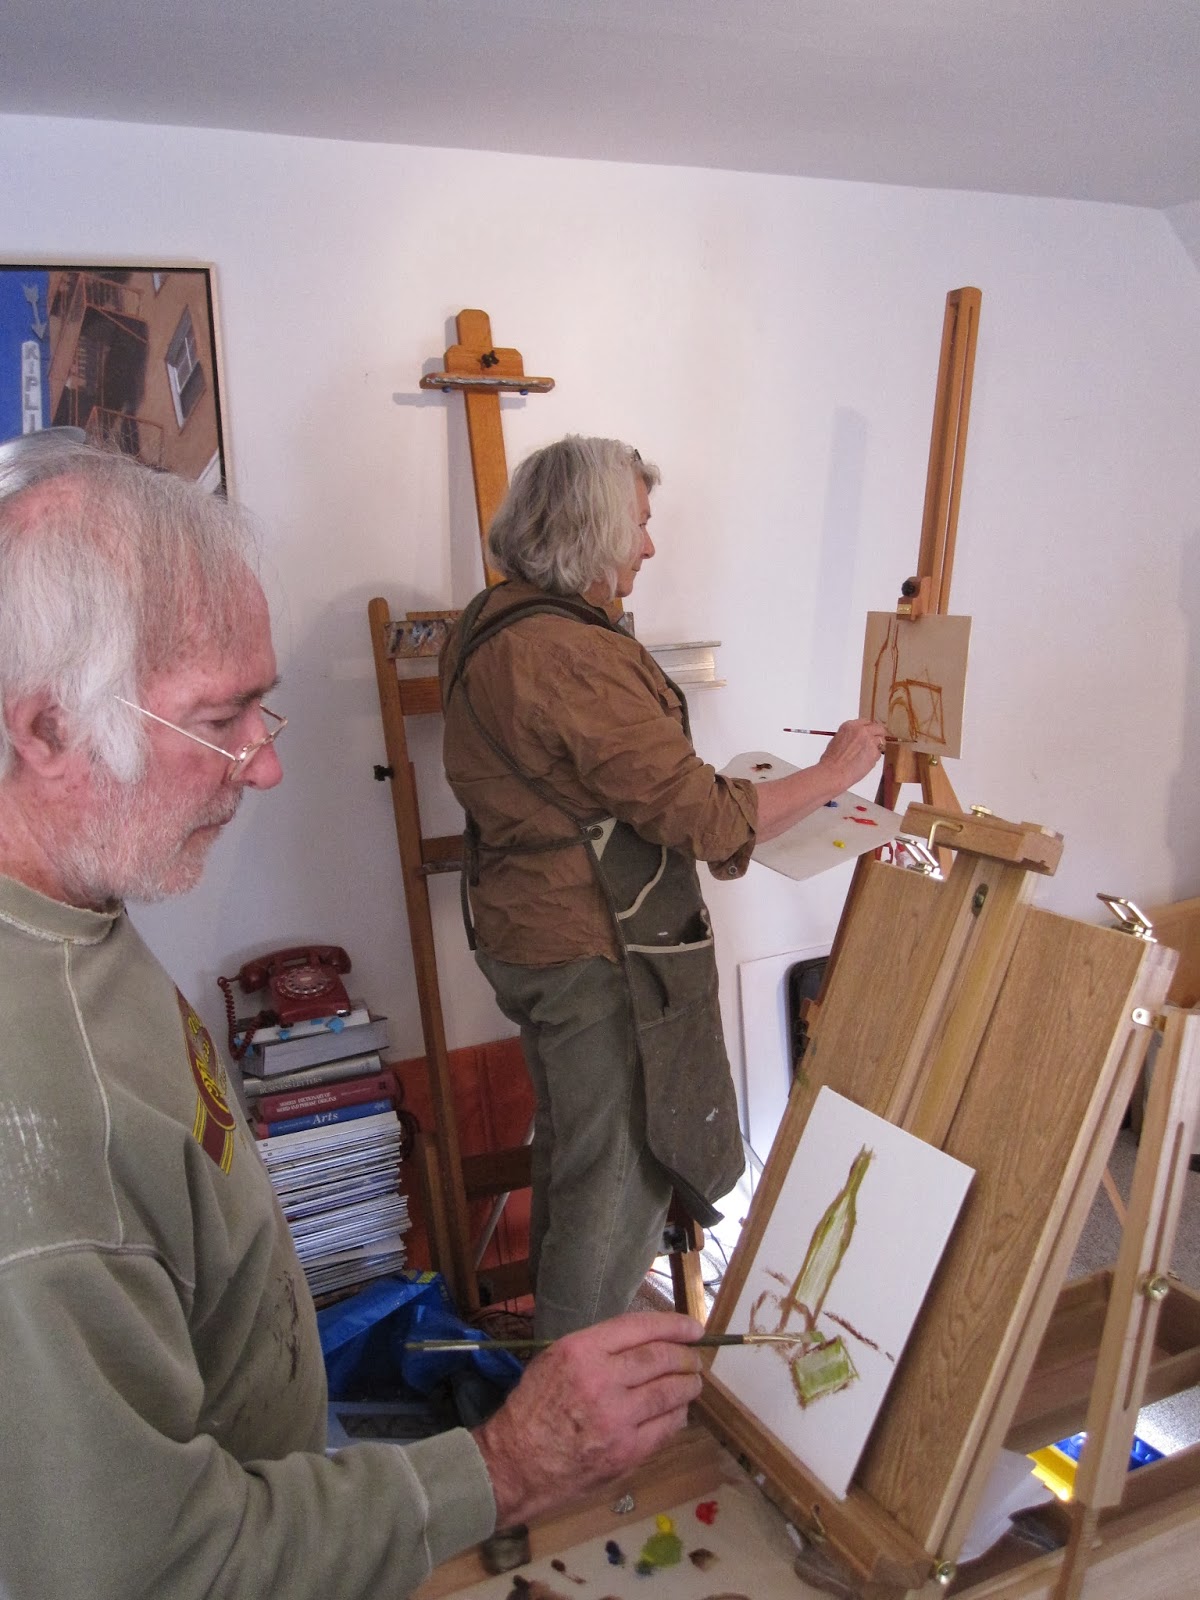 dan graziano art blog: Last Week's One-Day Oil Painting Workshop1200 x 1600